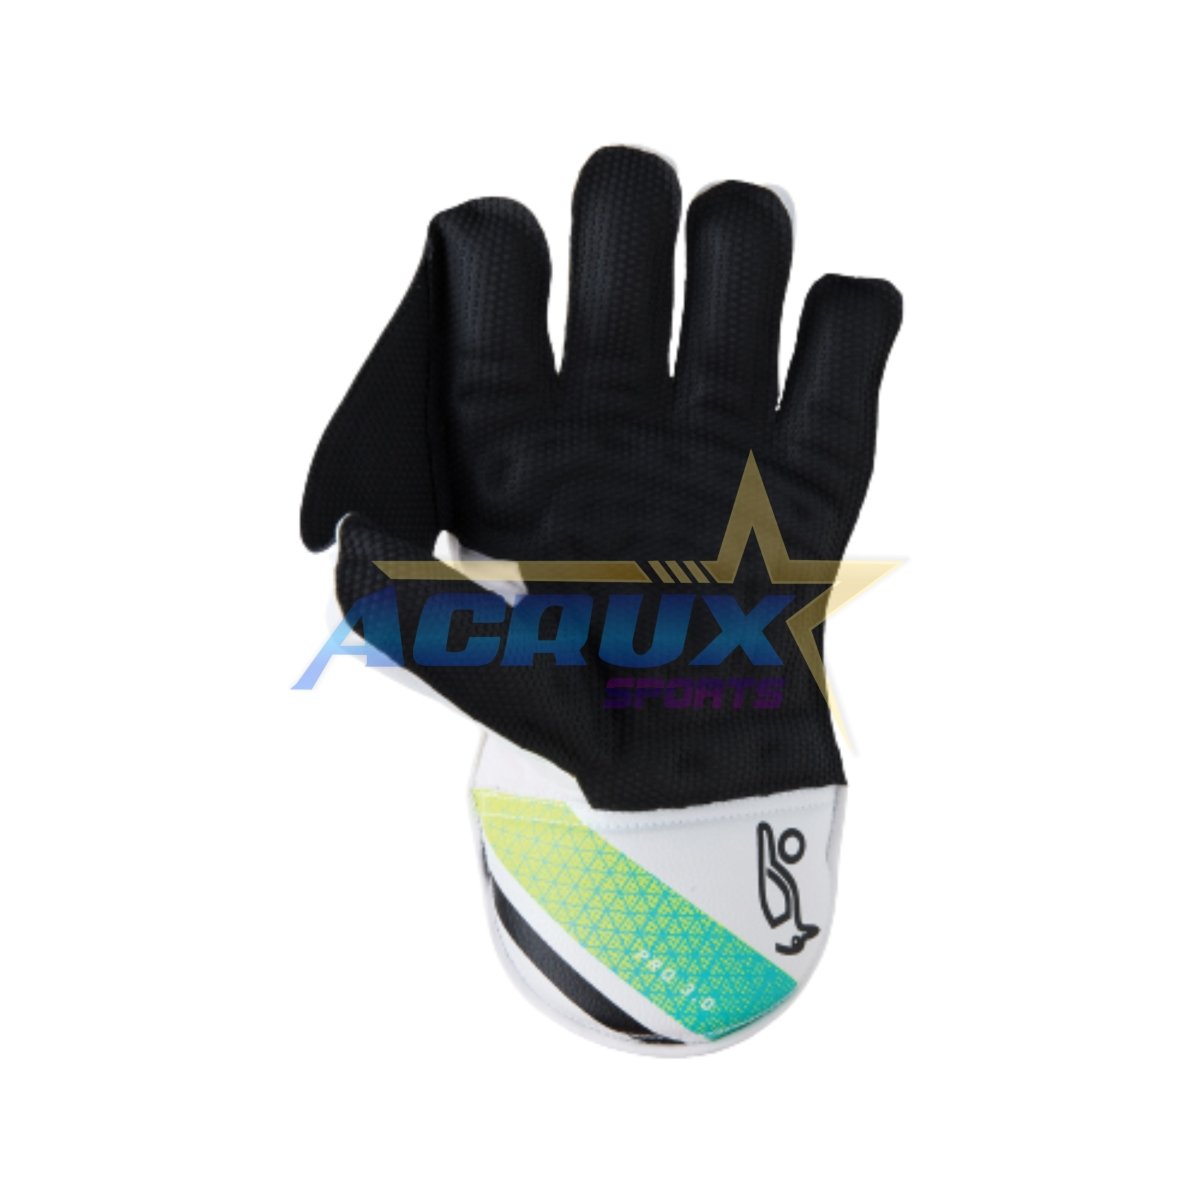 Kookaburra Rapid Pro 3.0 Cricket Wicket Keeping Gloves Junior.